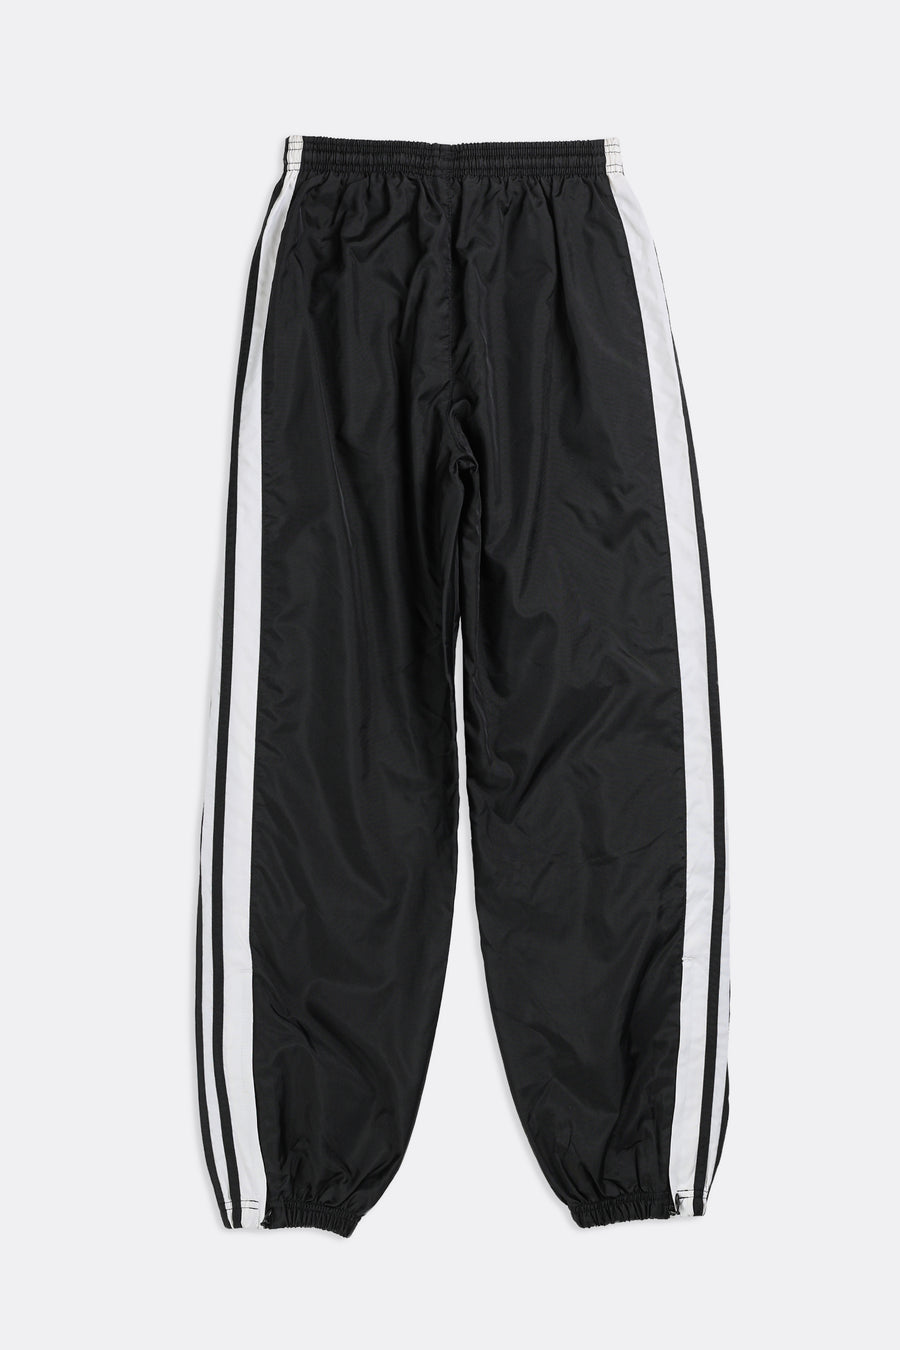 Vintage Adidas Windbreaker Pants - XS